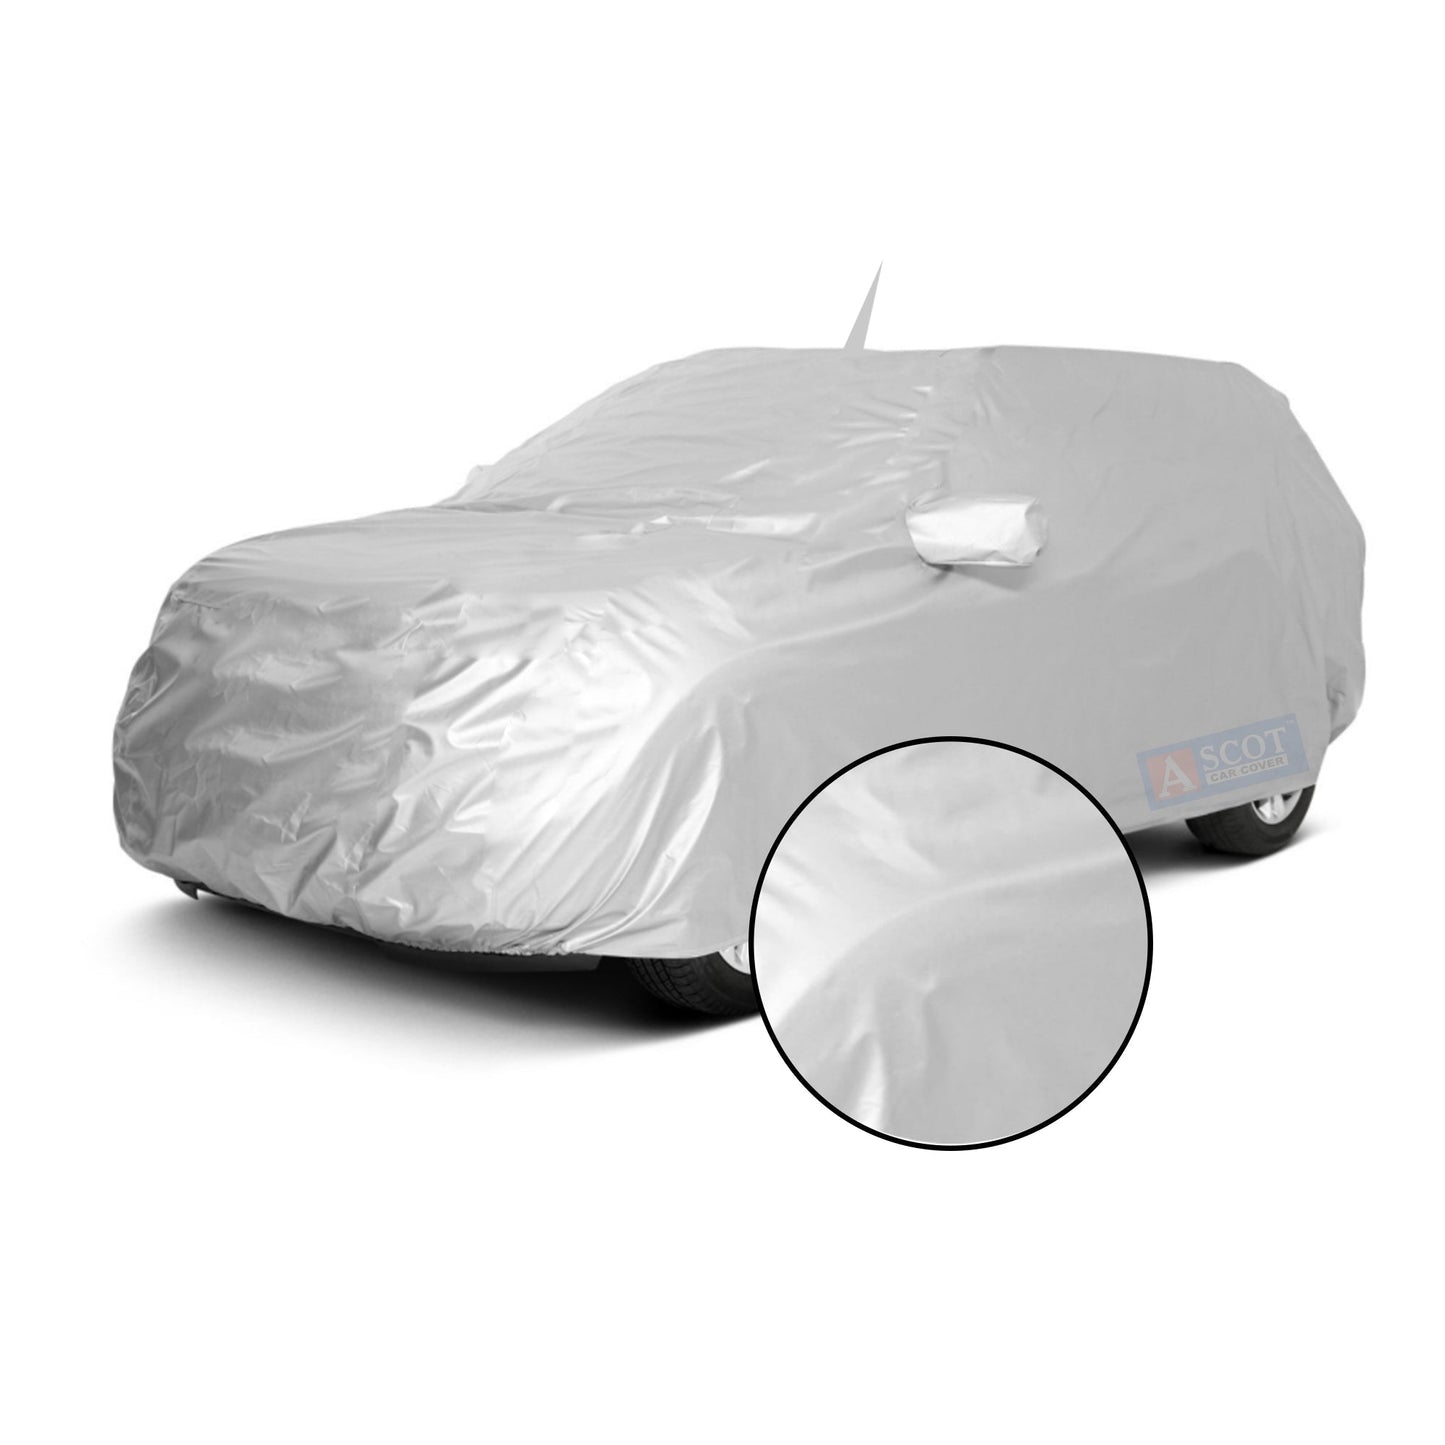 Ascot Tata Aria Car Body Cover Dust Proof, Trippel Stitched